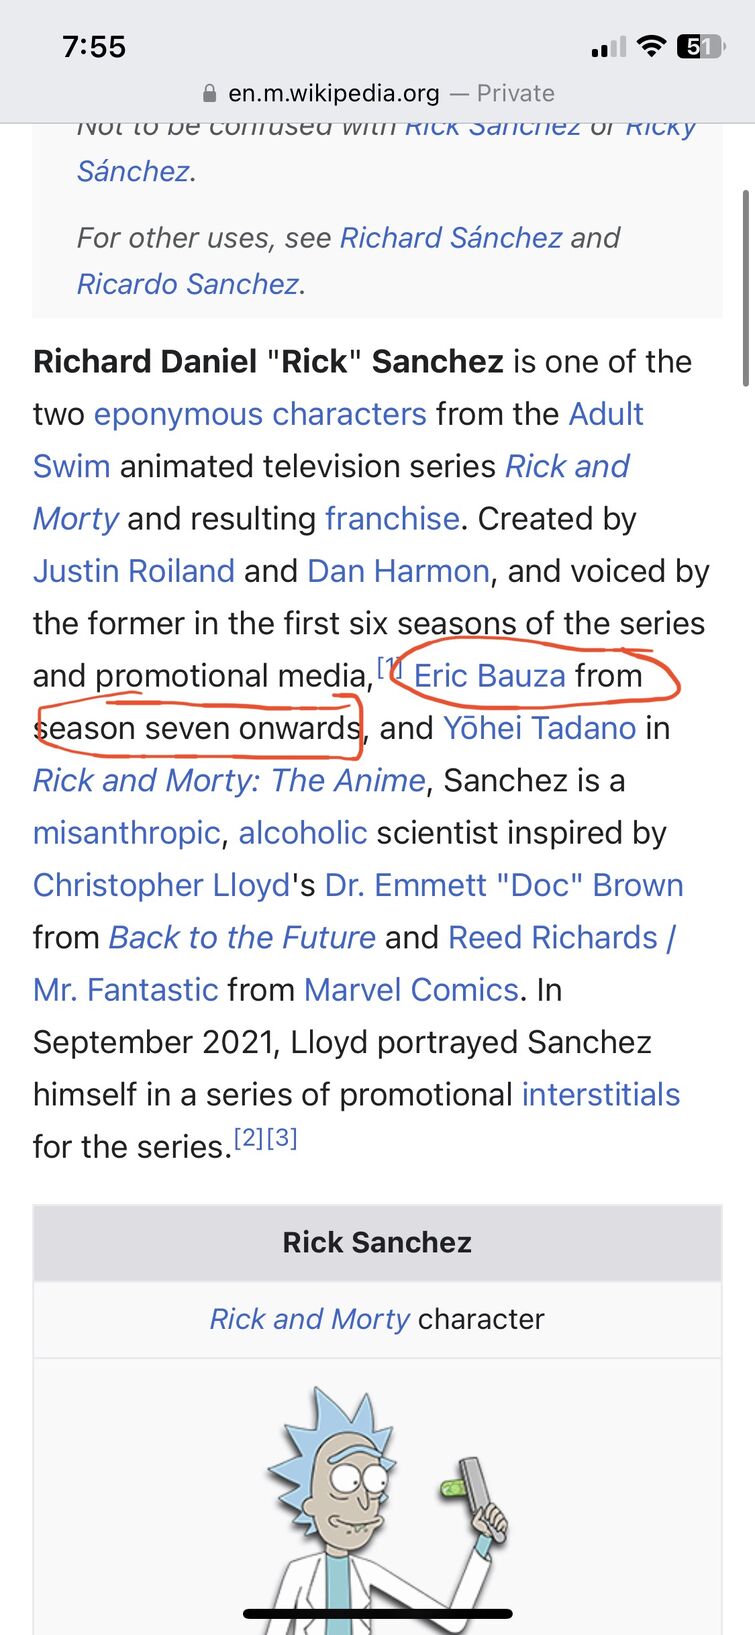 Rick and Morty (season 4) - Wikipedia